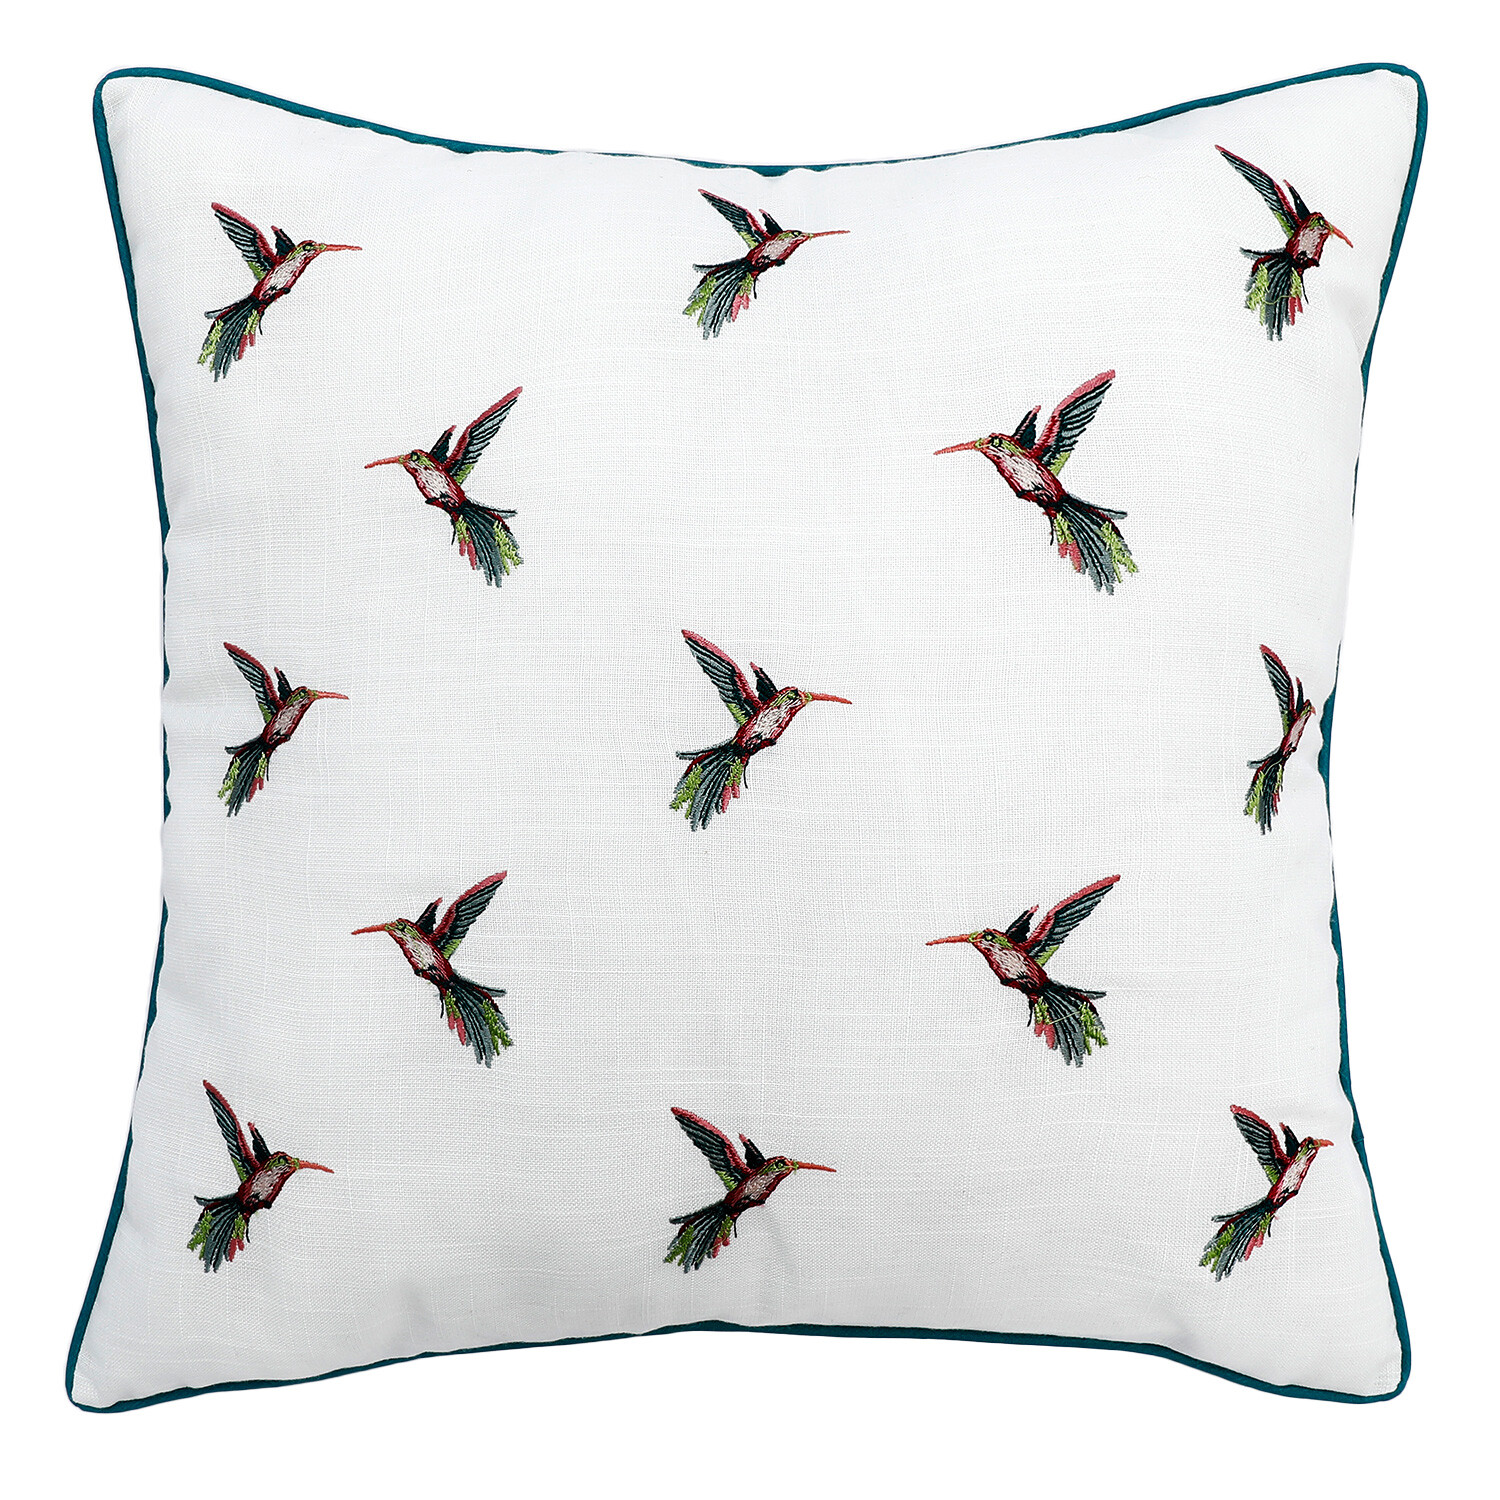 Hummingbird Embroidered Cushion - Teal Image 1